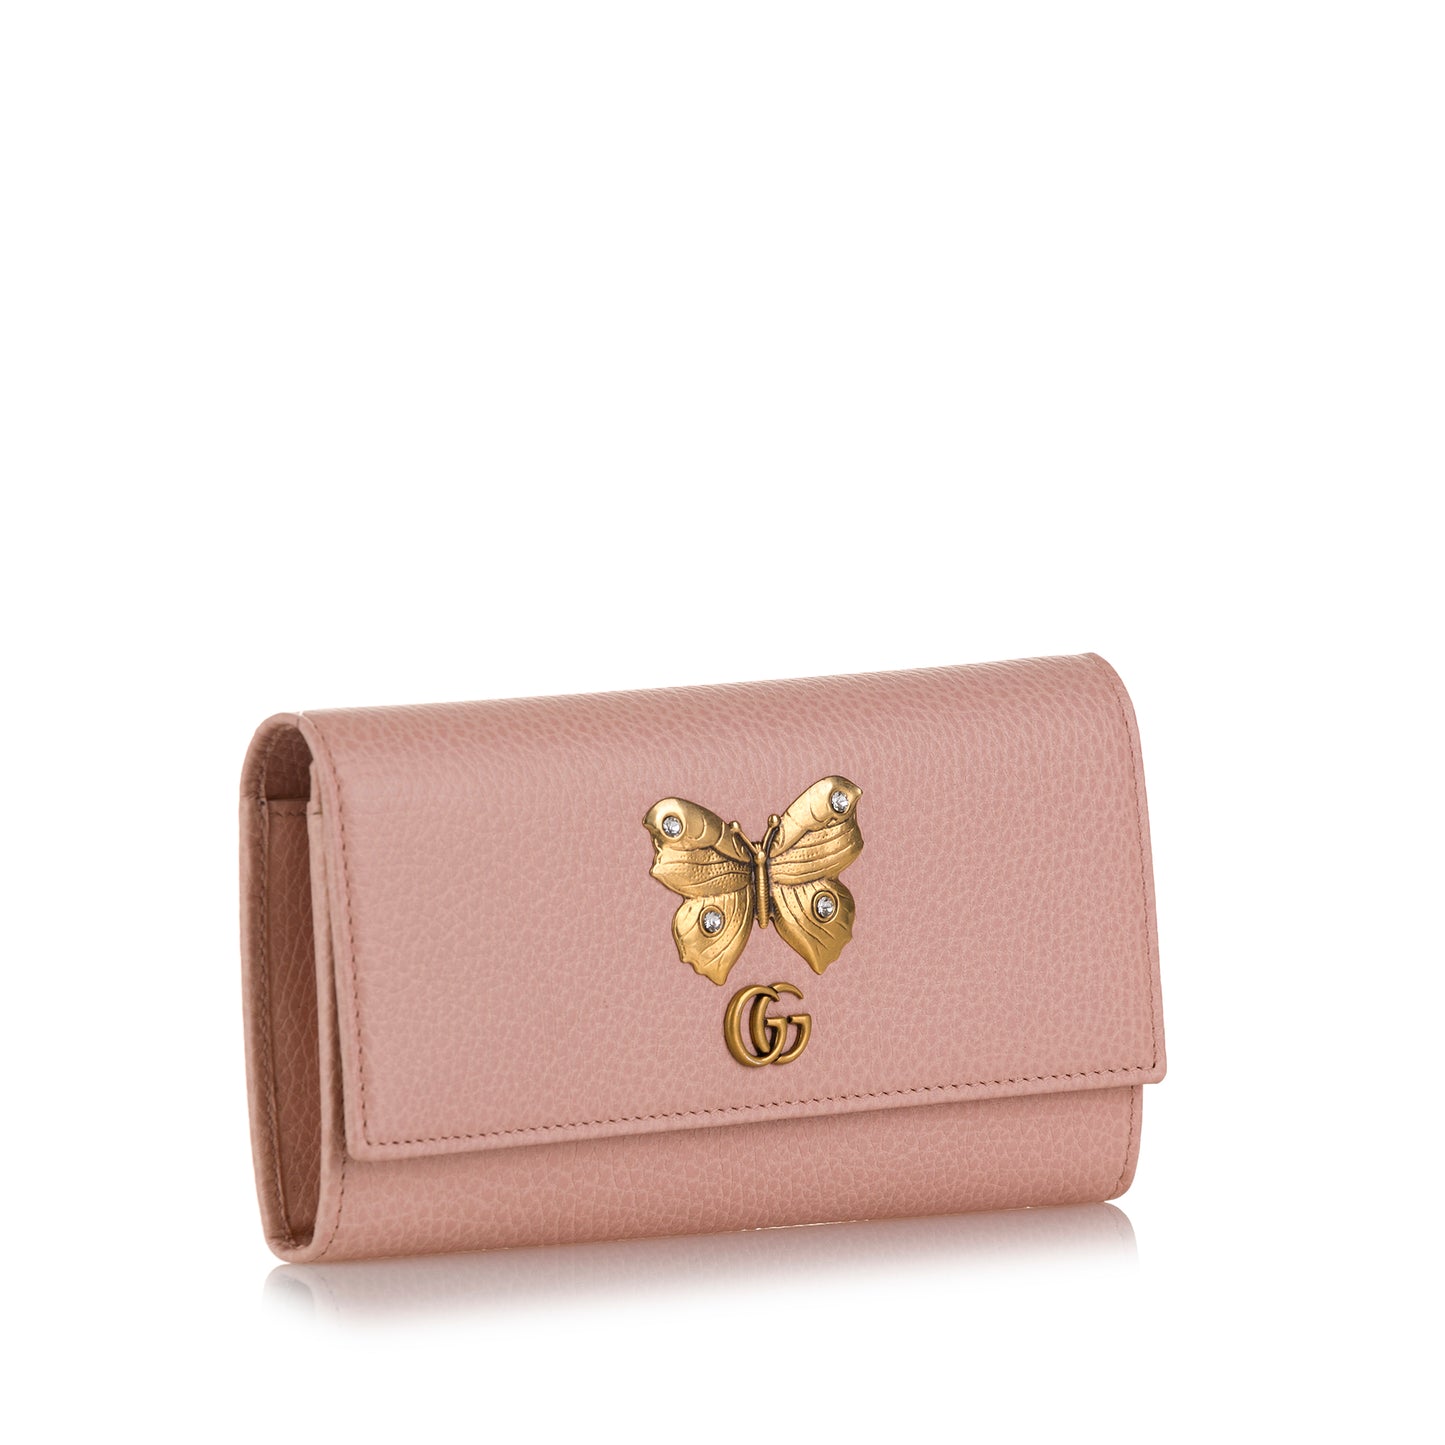 Garden GG Marmont Butterfly Wallet